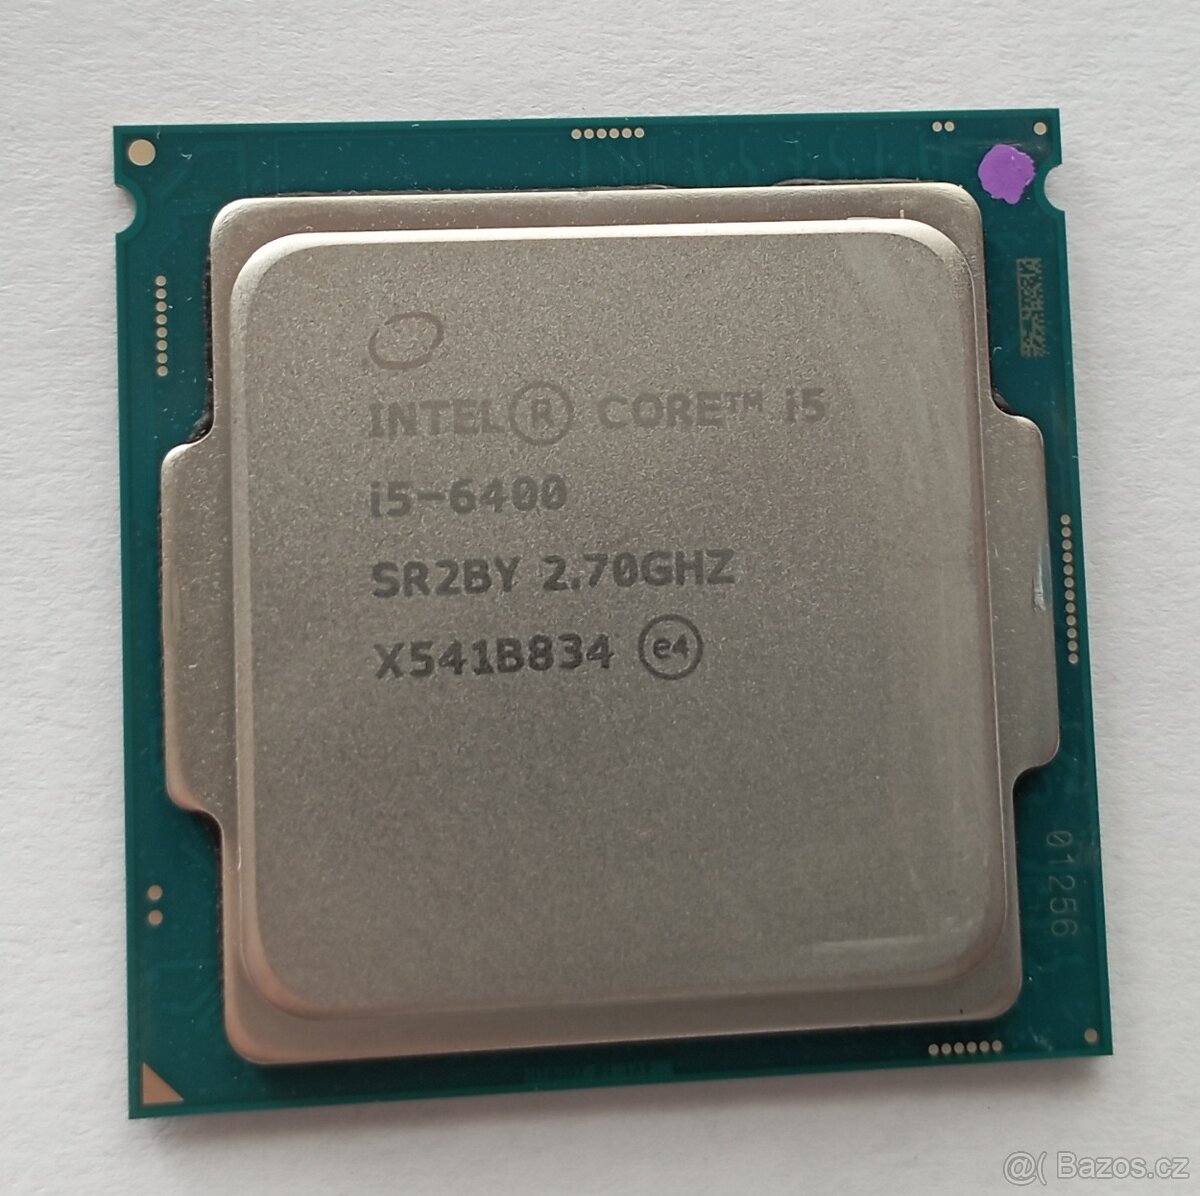 Intel® Core™ i5-6400 2.7/ 3.3 GHz, 6M L3, s1151